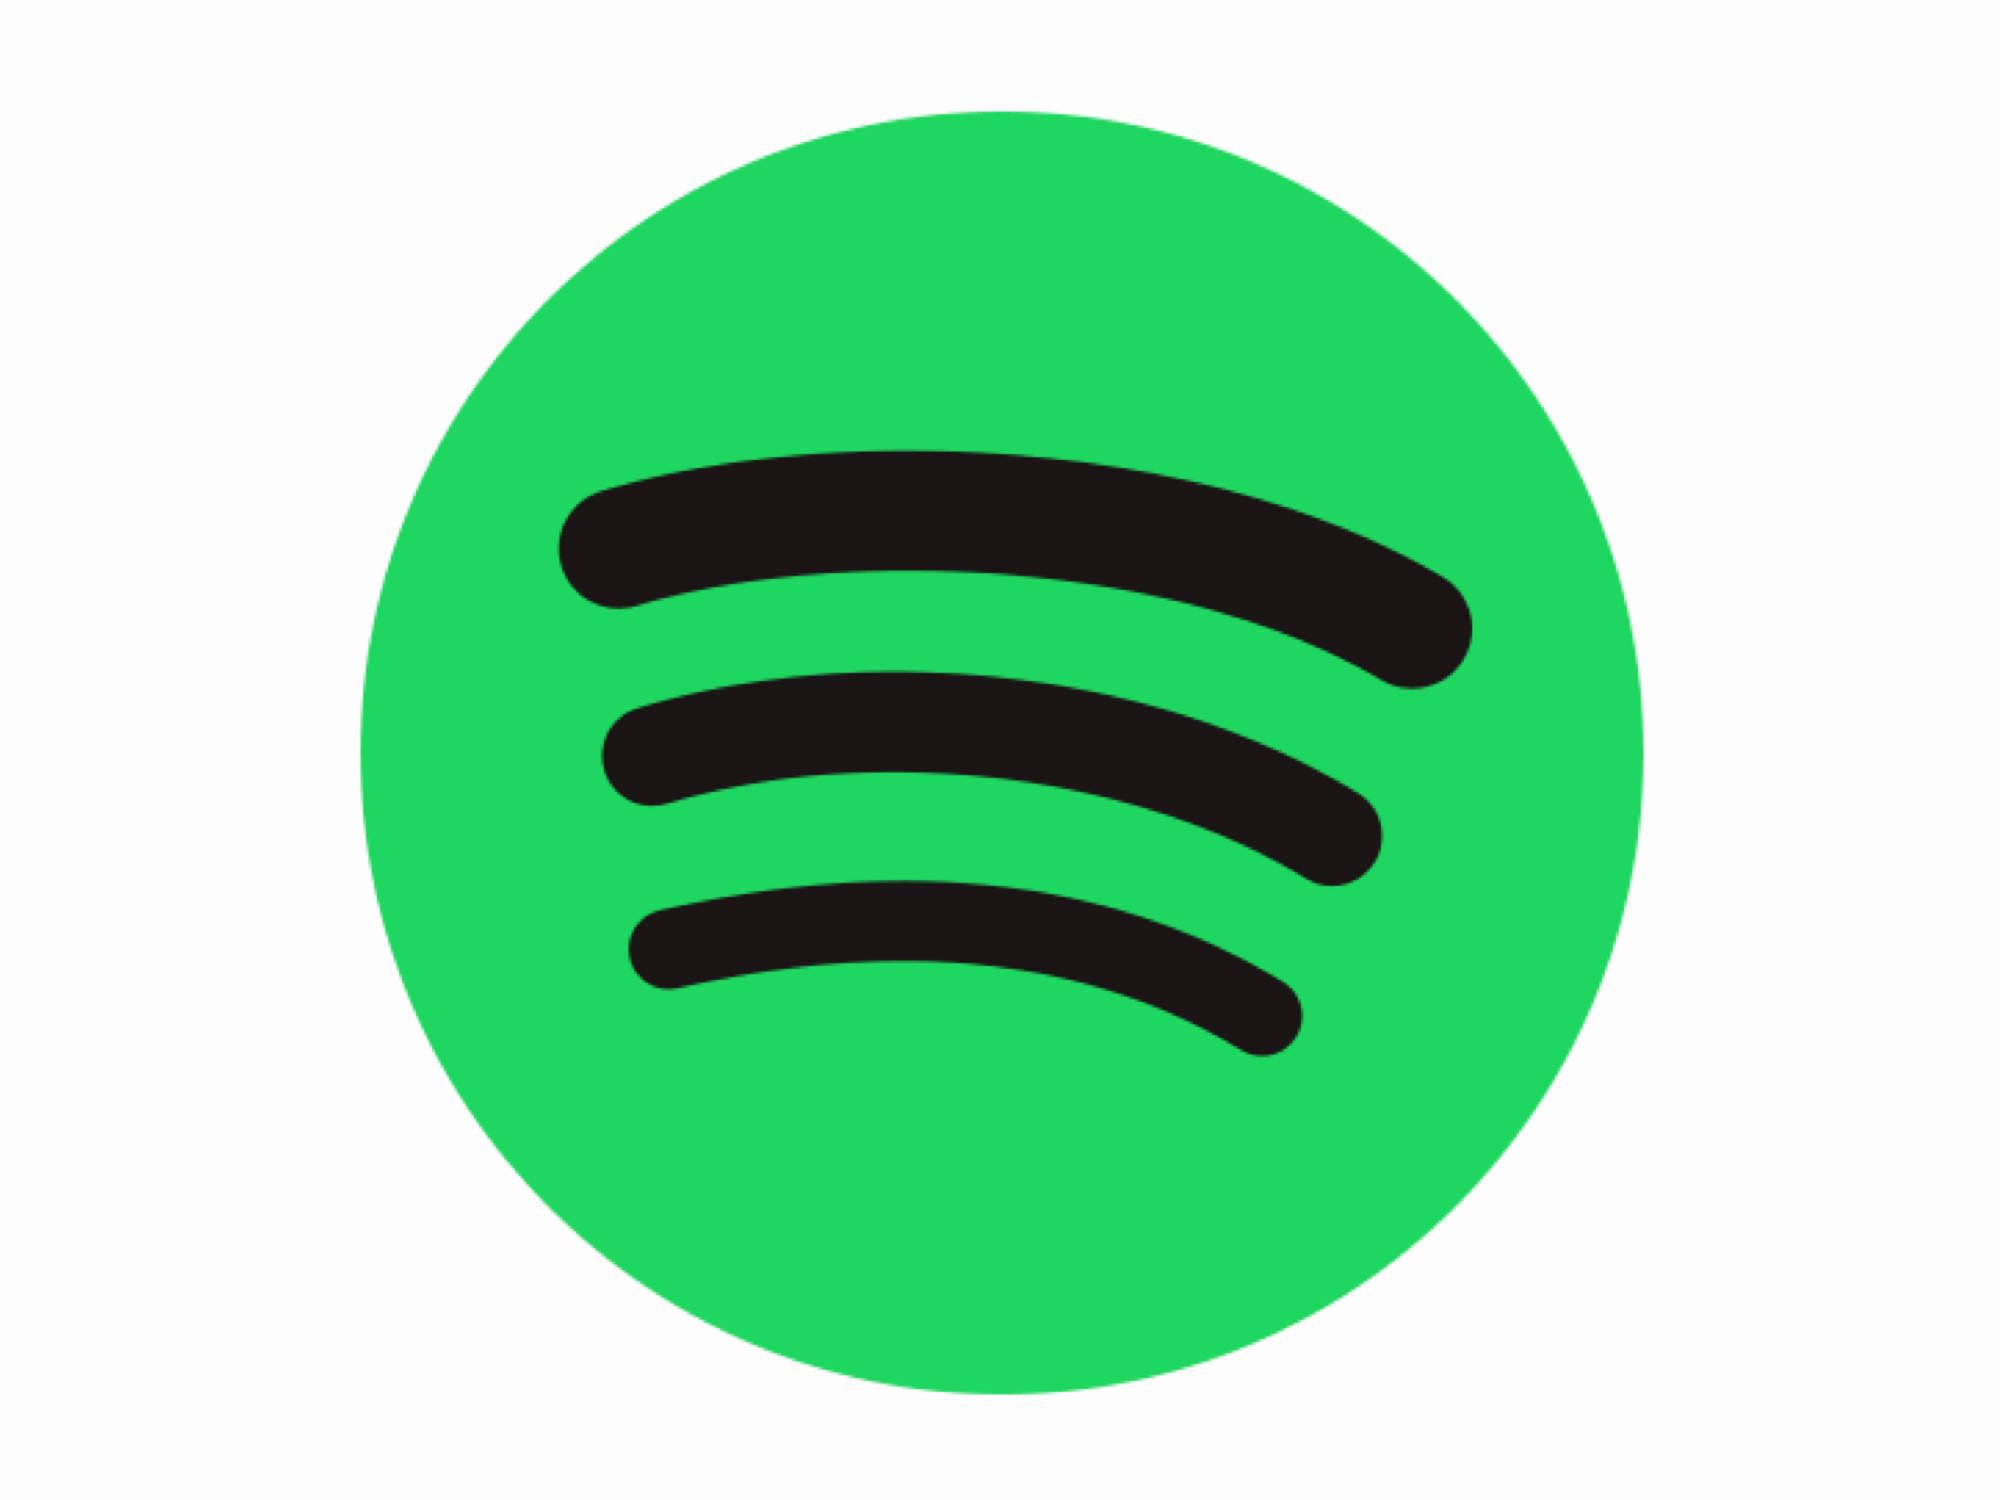 Spotify senkt Preis für Familienabo | AndroidPIT2000 x 1500